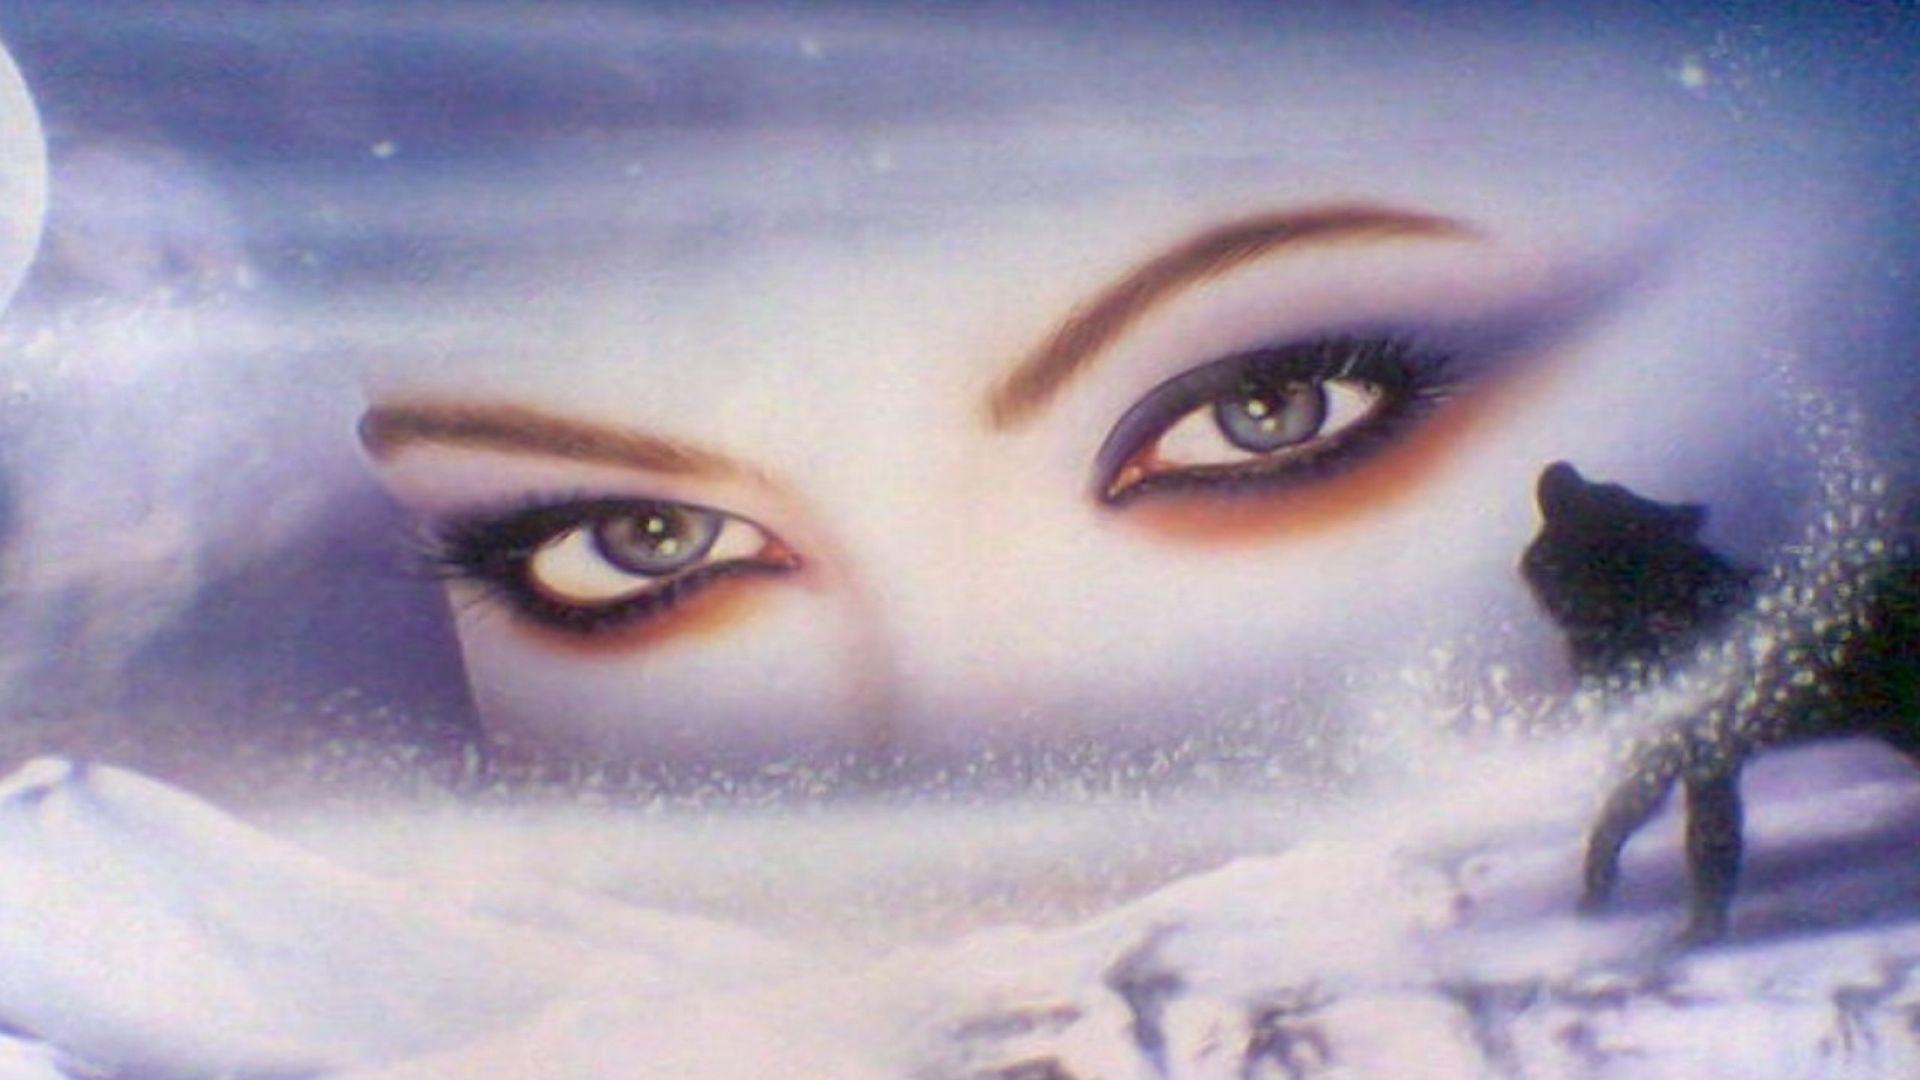 Beautiful girl eye closeup photography HD images 1440x900 free download